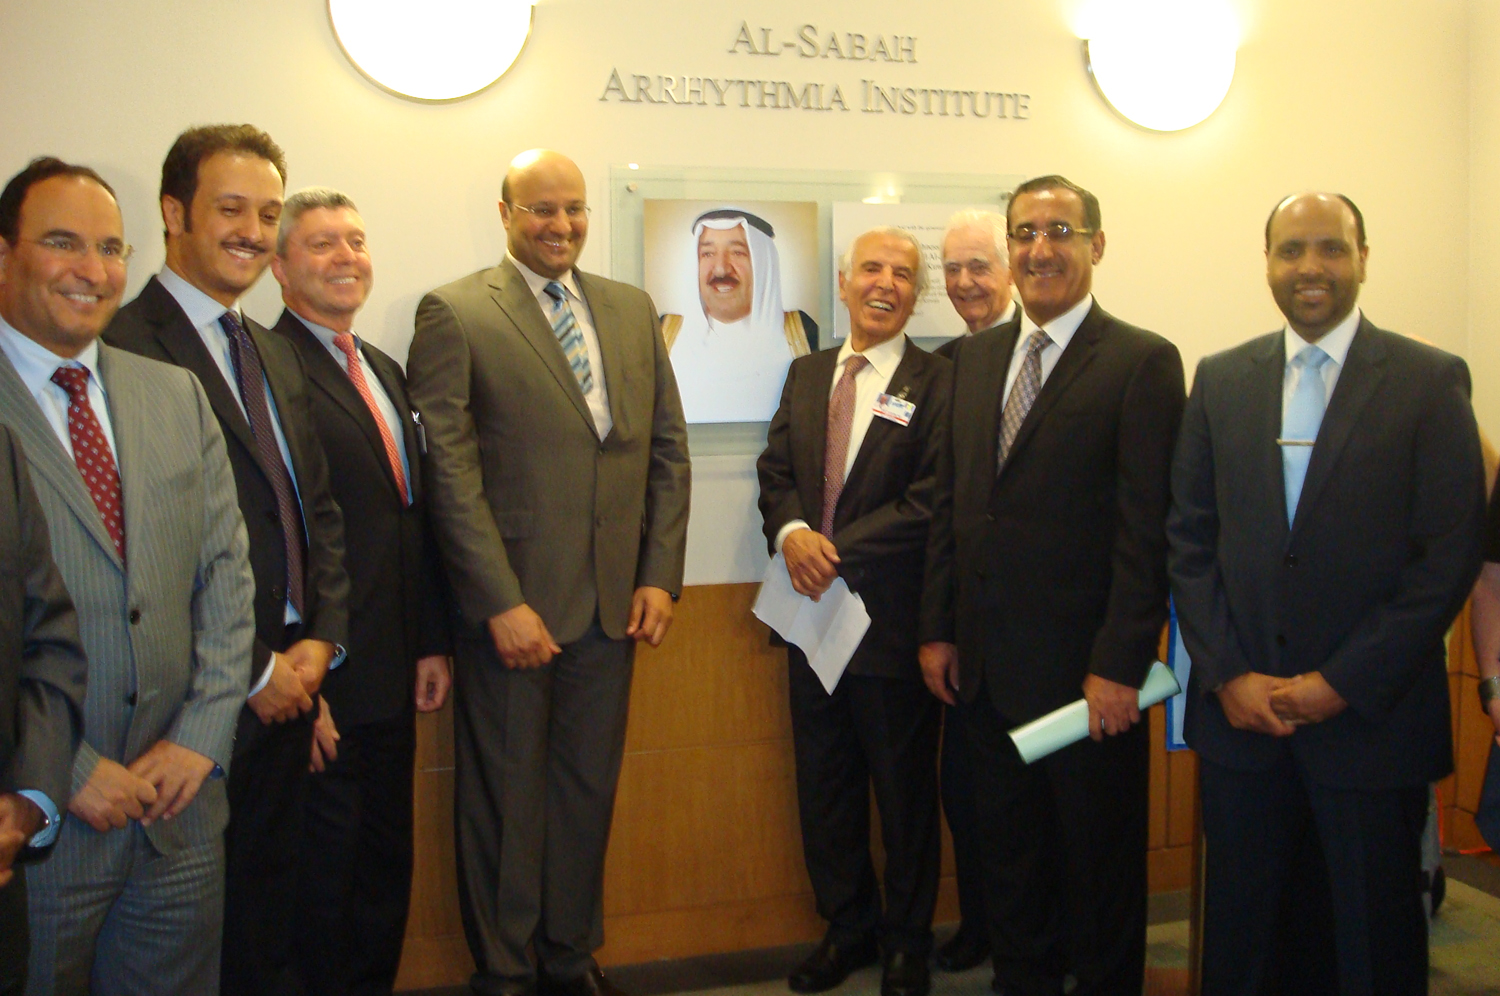 Kuwaiti Health Minister Dr. Ali Al-Obaidi inaugurated Sheikh Sabah Arrhythmia Institute at St. Luke's Roosvelt Hospital